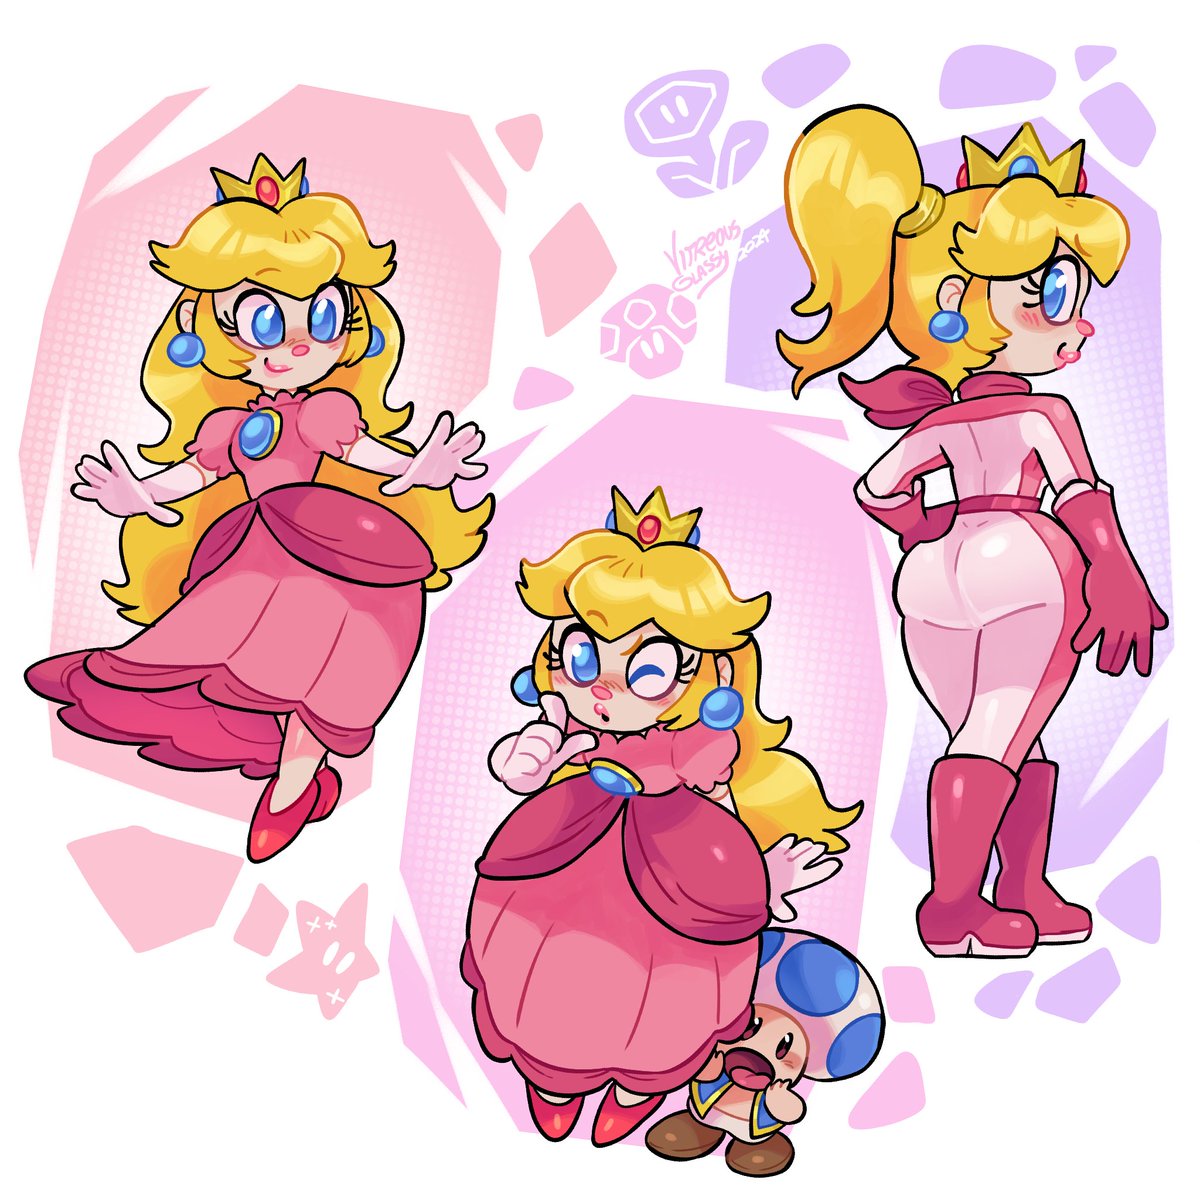 Yay! Hooray! #PrincessPeach #Mario